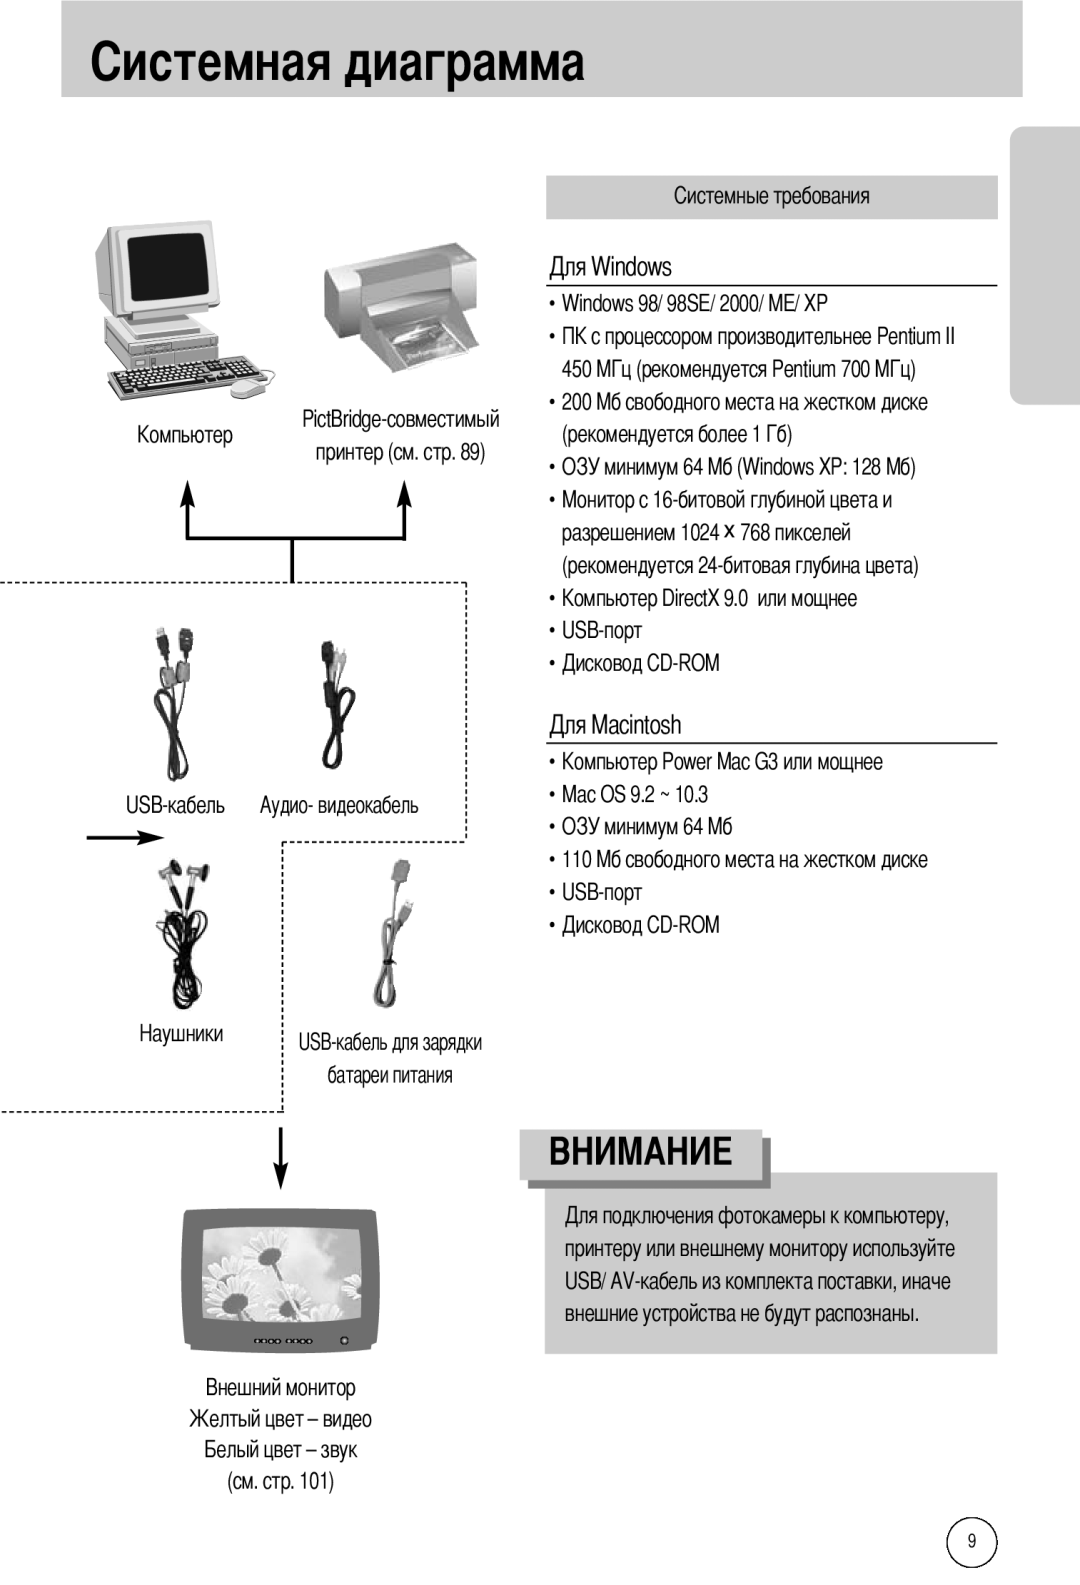 Samsung EC-I50ZZBBA/GB manual PictBridge-совместимый, USB-кабель Аудио- видеокабель, батареи питания, USB-порт, см. стр 